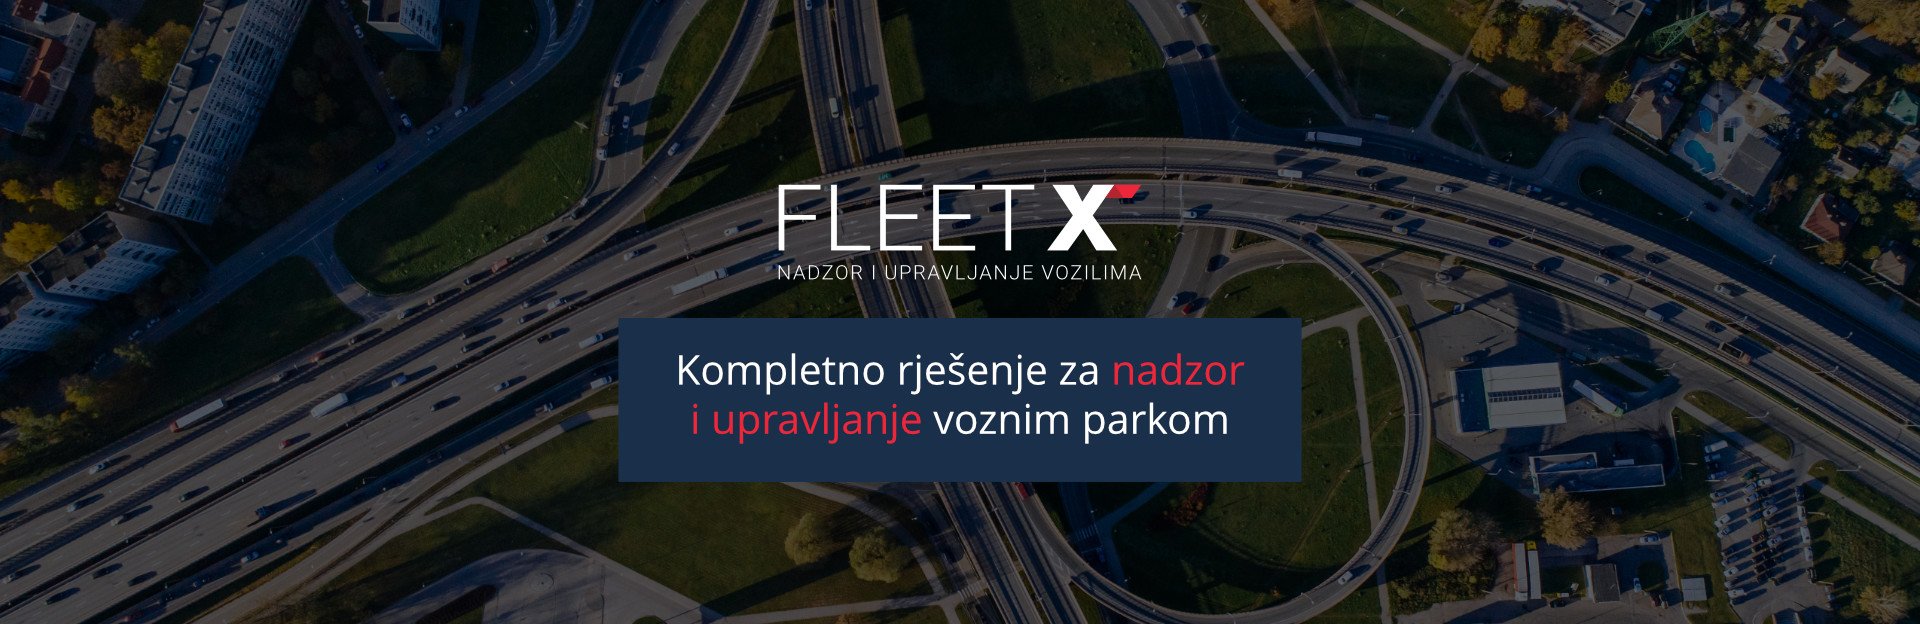 FleetX Banner - Kompletno rješenje za nadzor i upravljanje voznim parkom